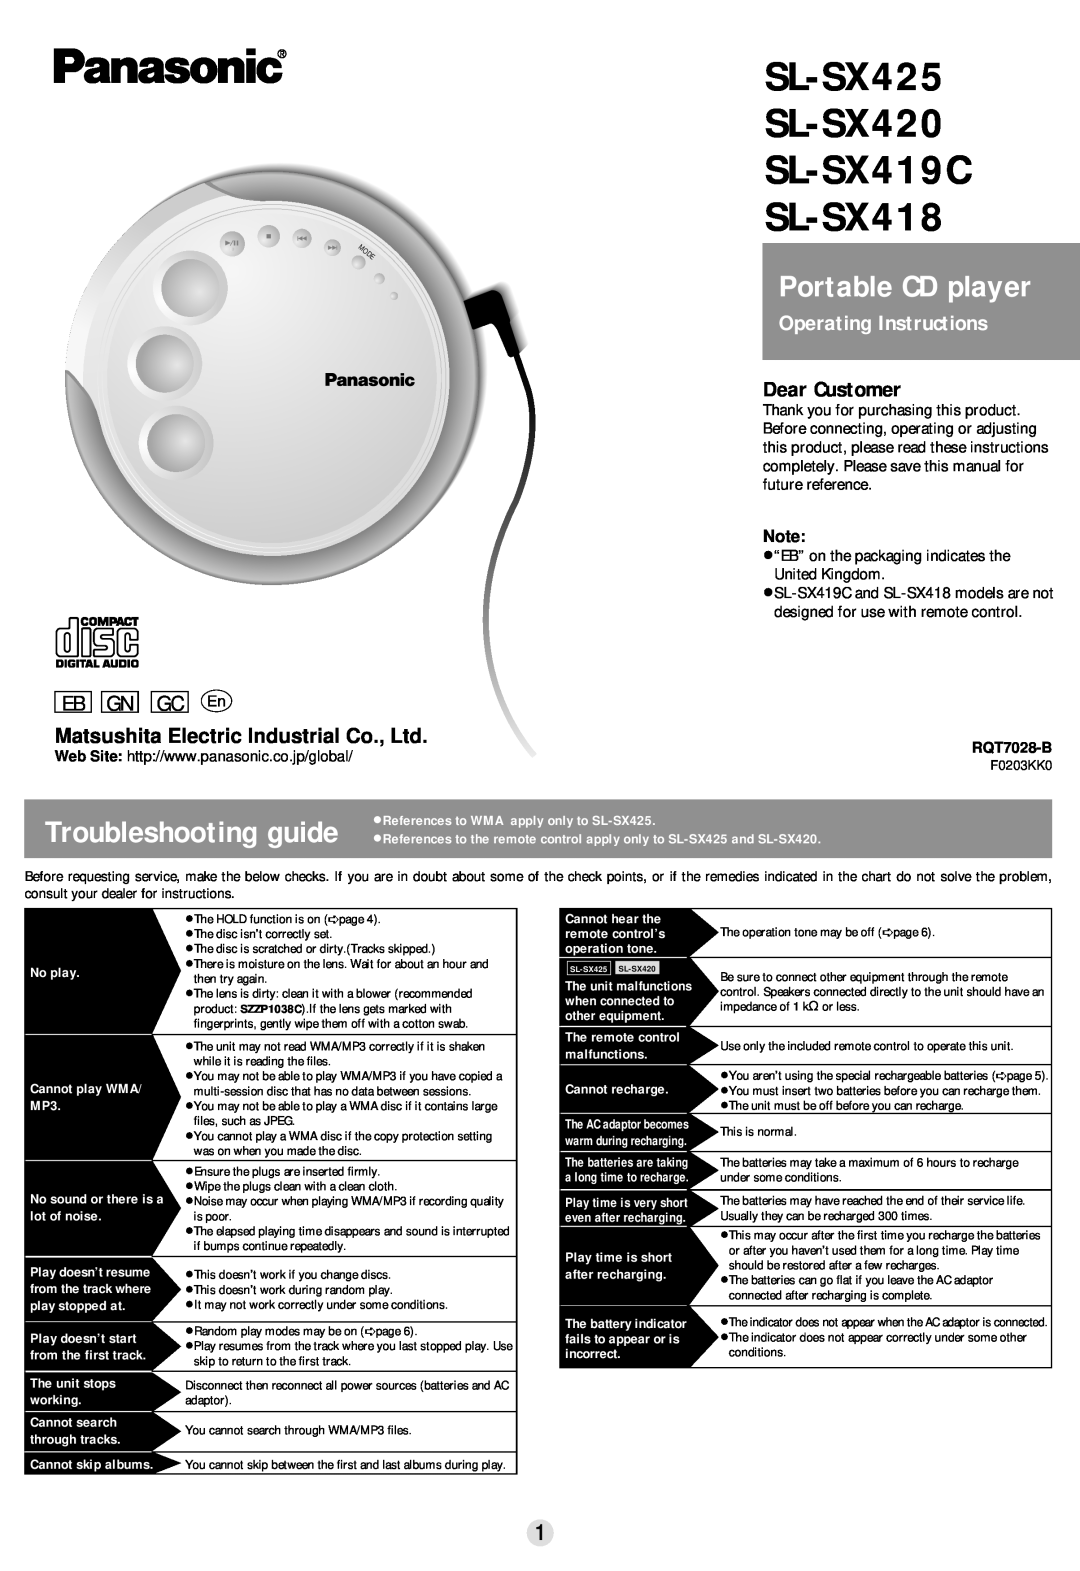 Panasonic operating instructions SL-SX425 SL-SX420 SL-SX419C SL-SX418, Portable CD player, Operating Instructions 